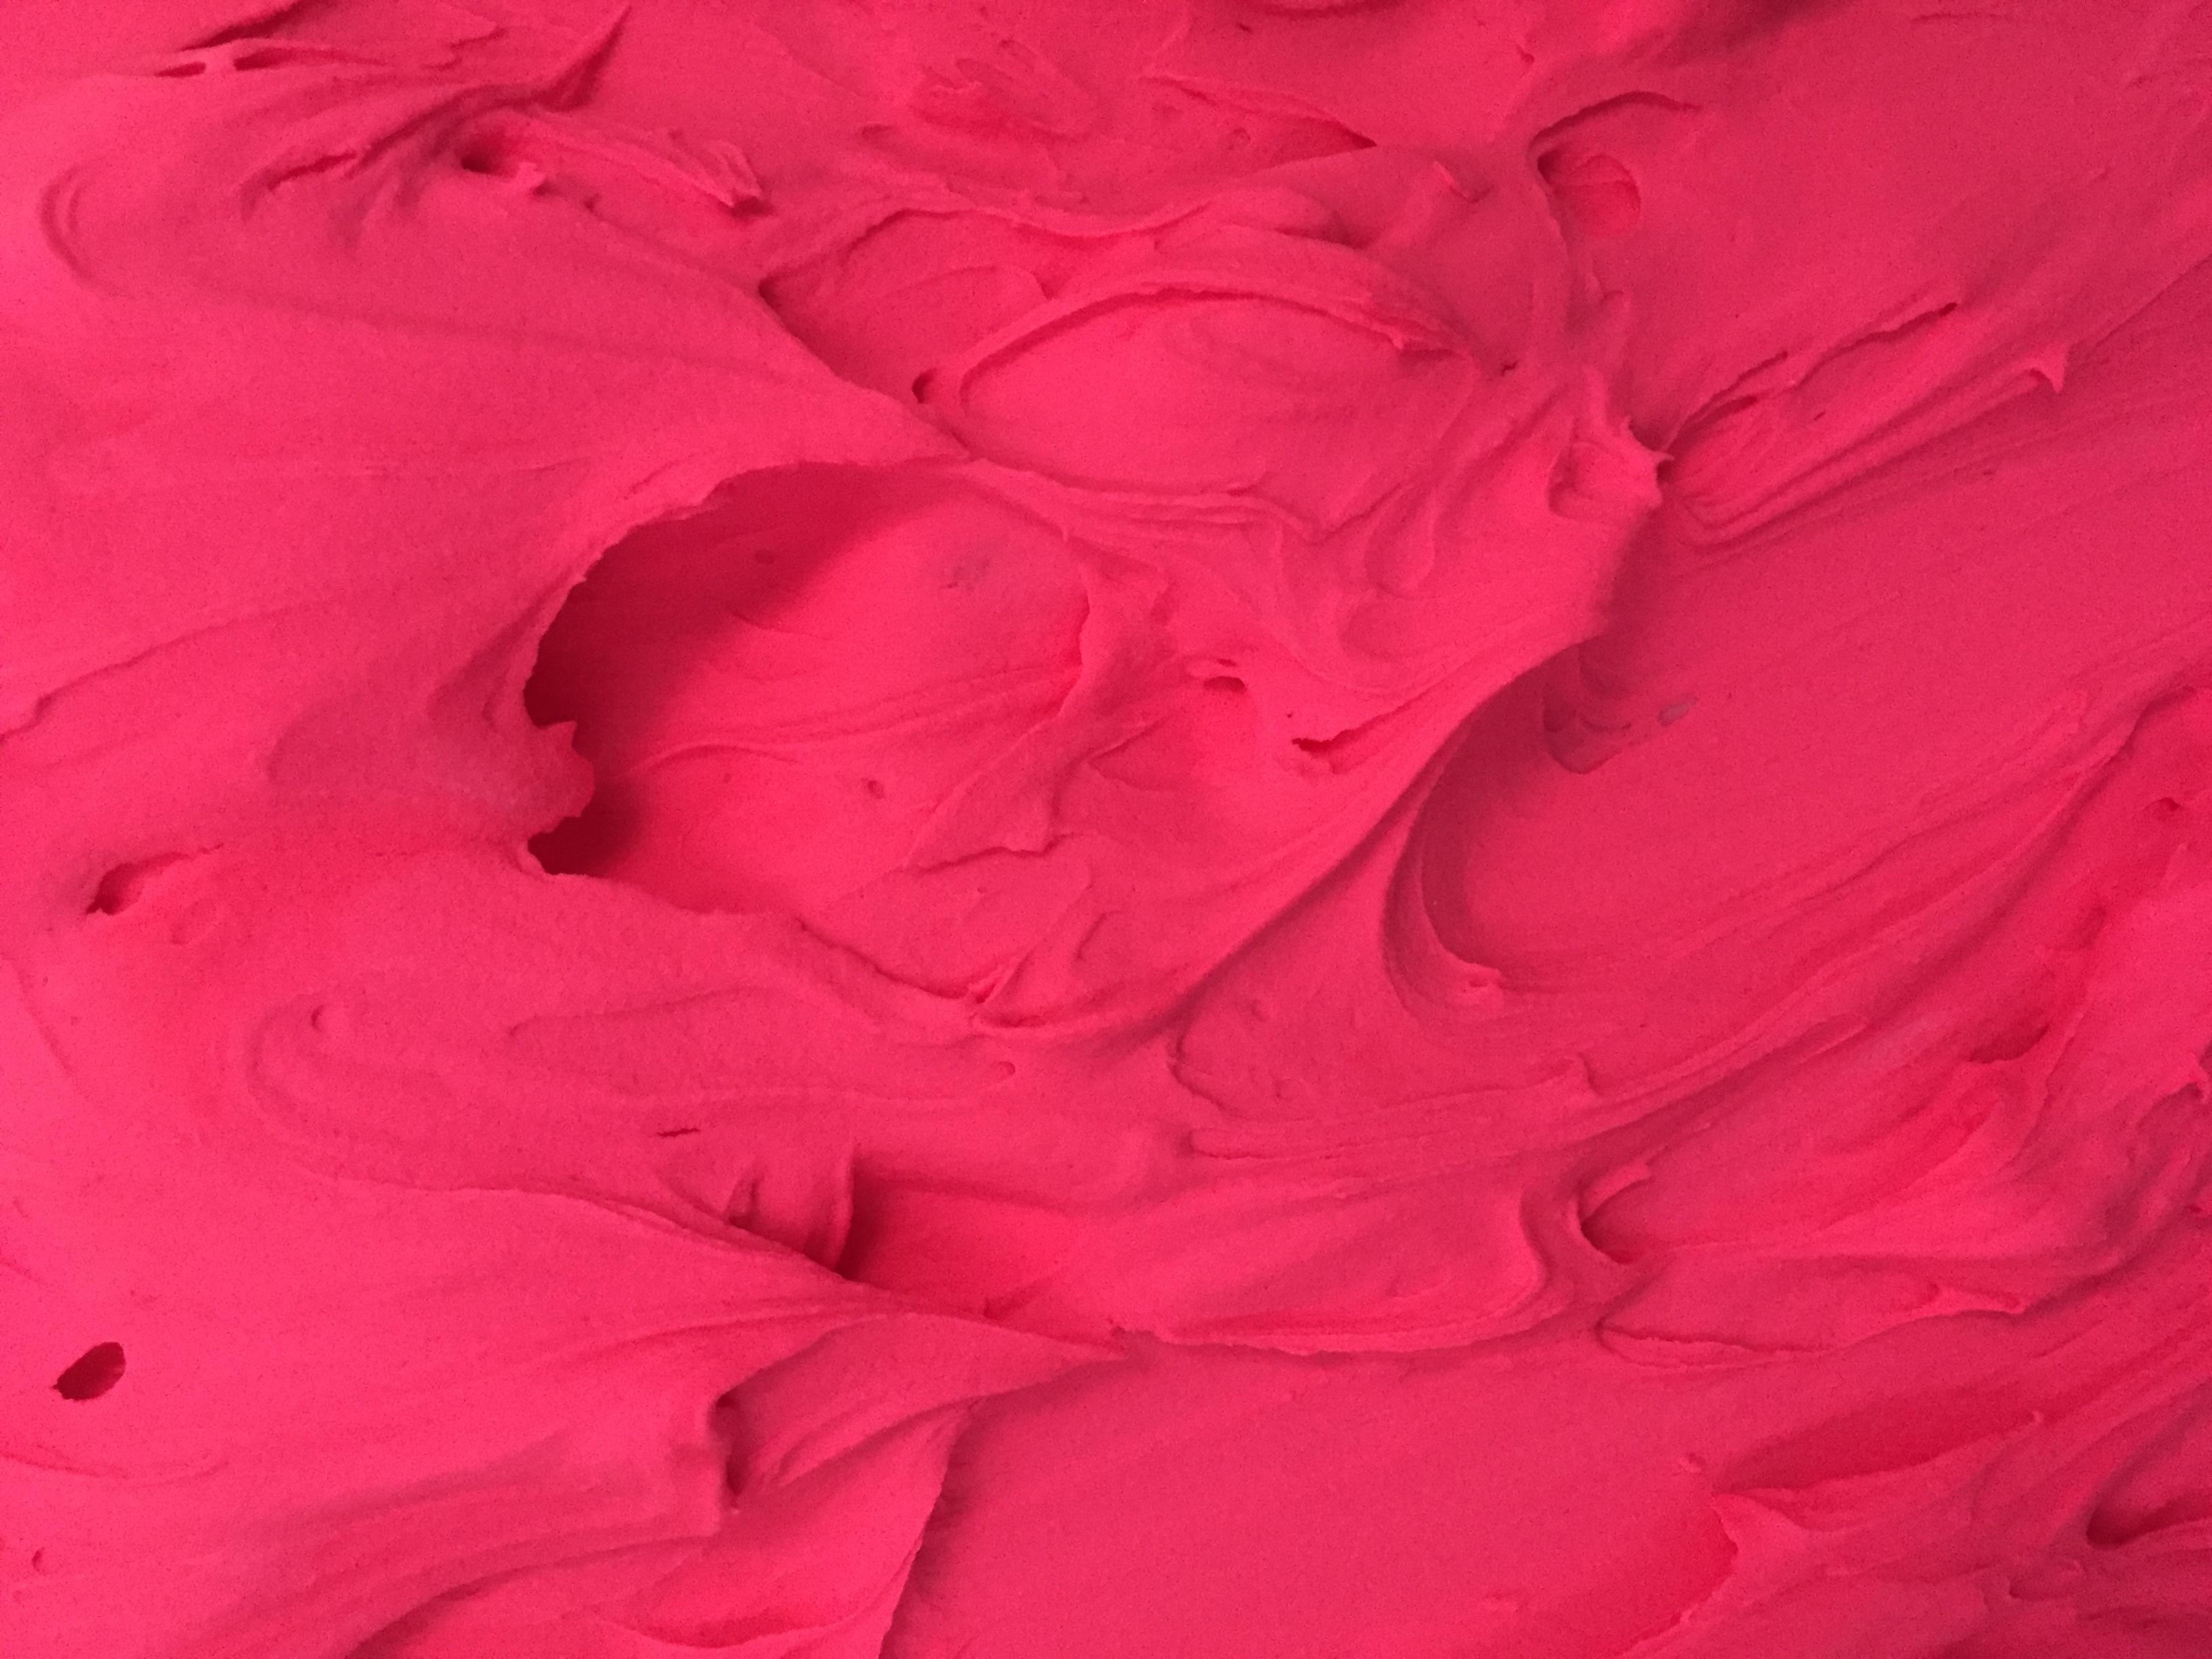 Electric Pink (texture thick painting impasto monochrome pop bold design) - Pop Art Sculpture by Chloe Hedden